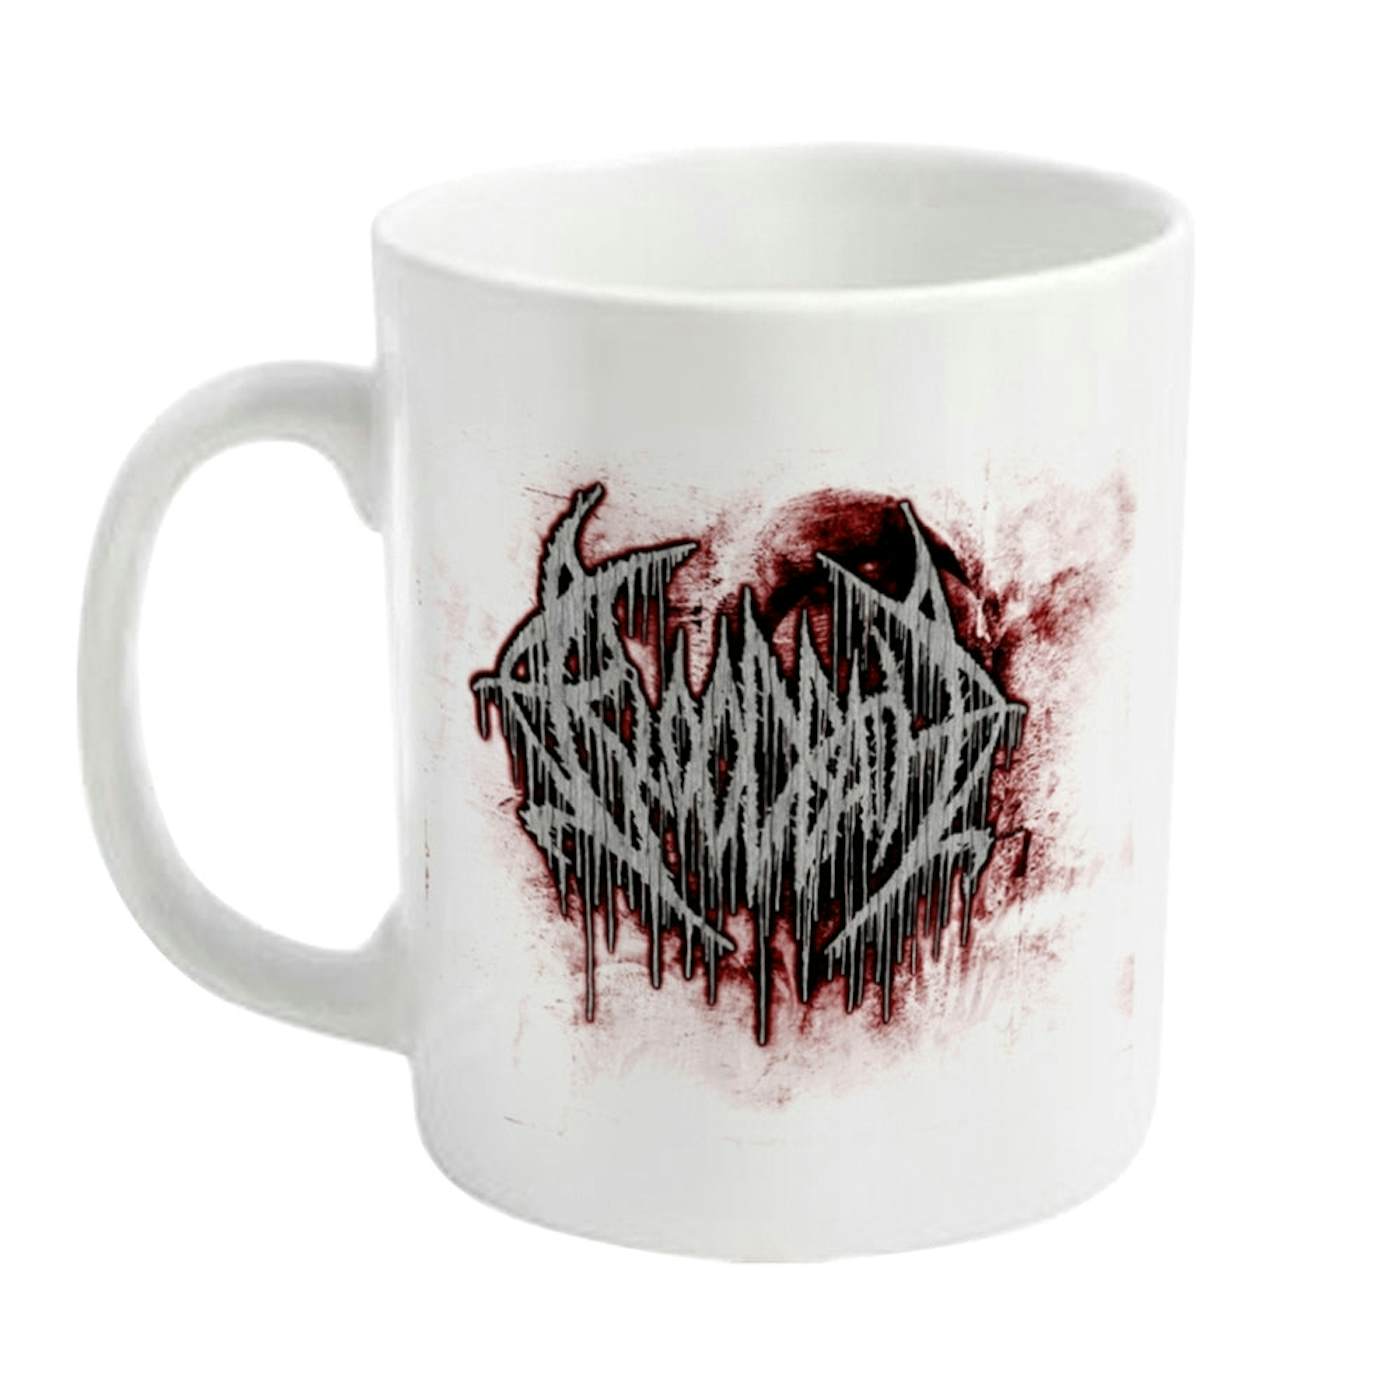 Bloodbath Mug - Death Metal